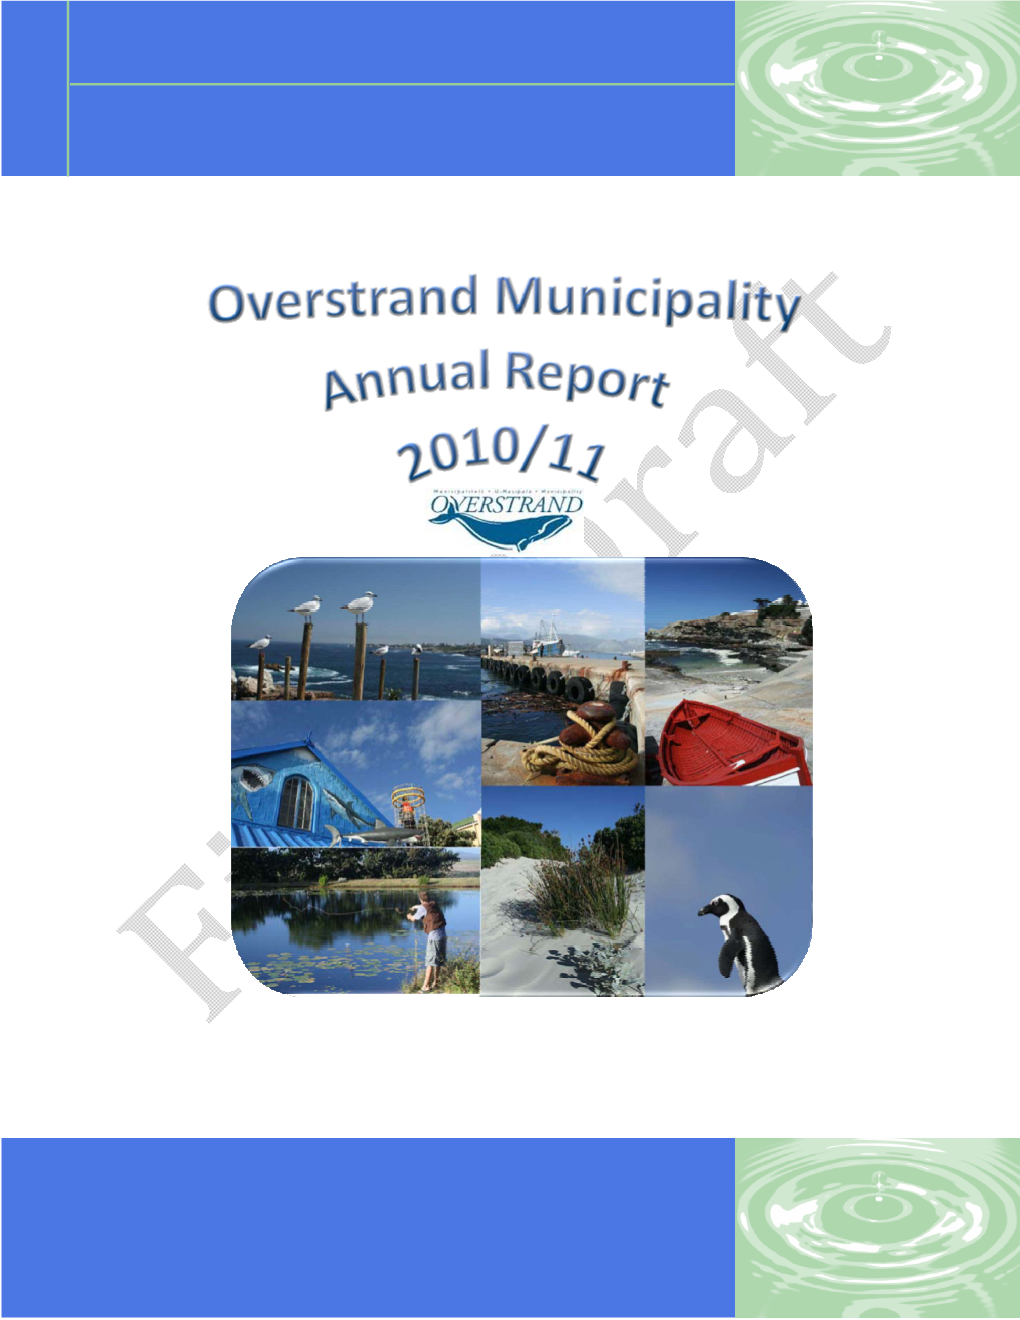 Overstrand Local Municipality Final Draft Annual Report 2010/11